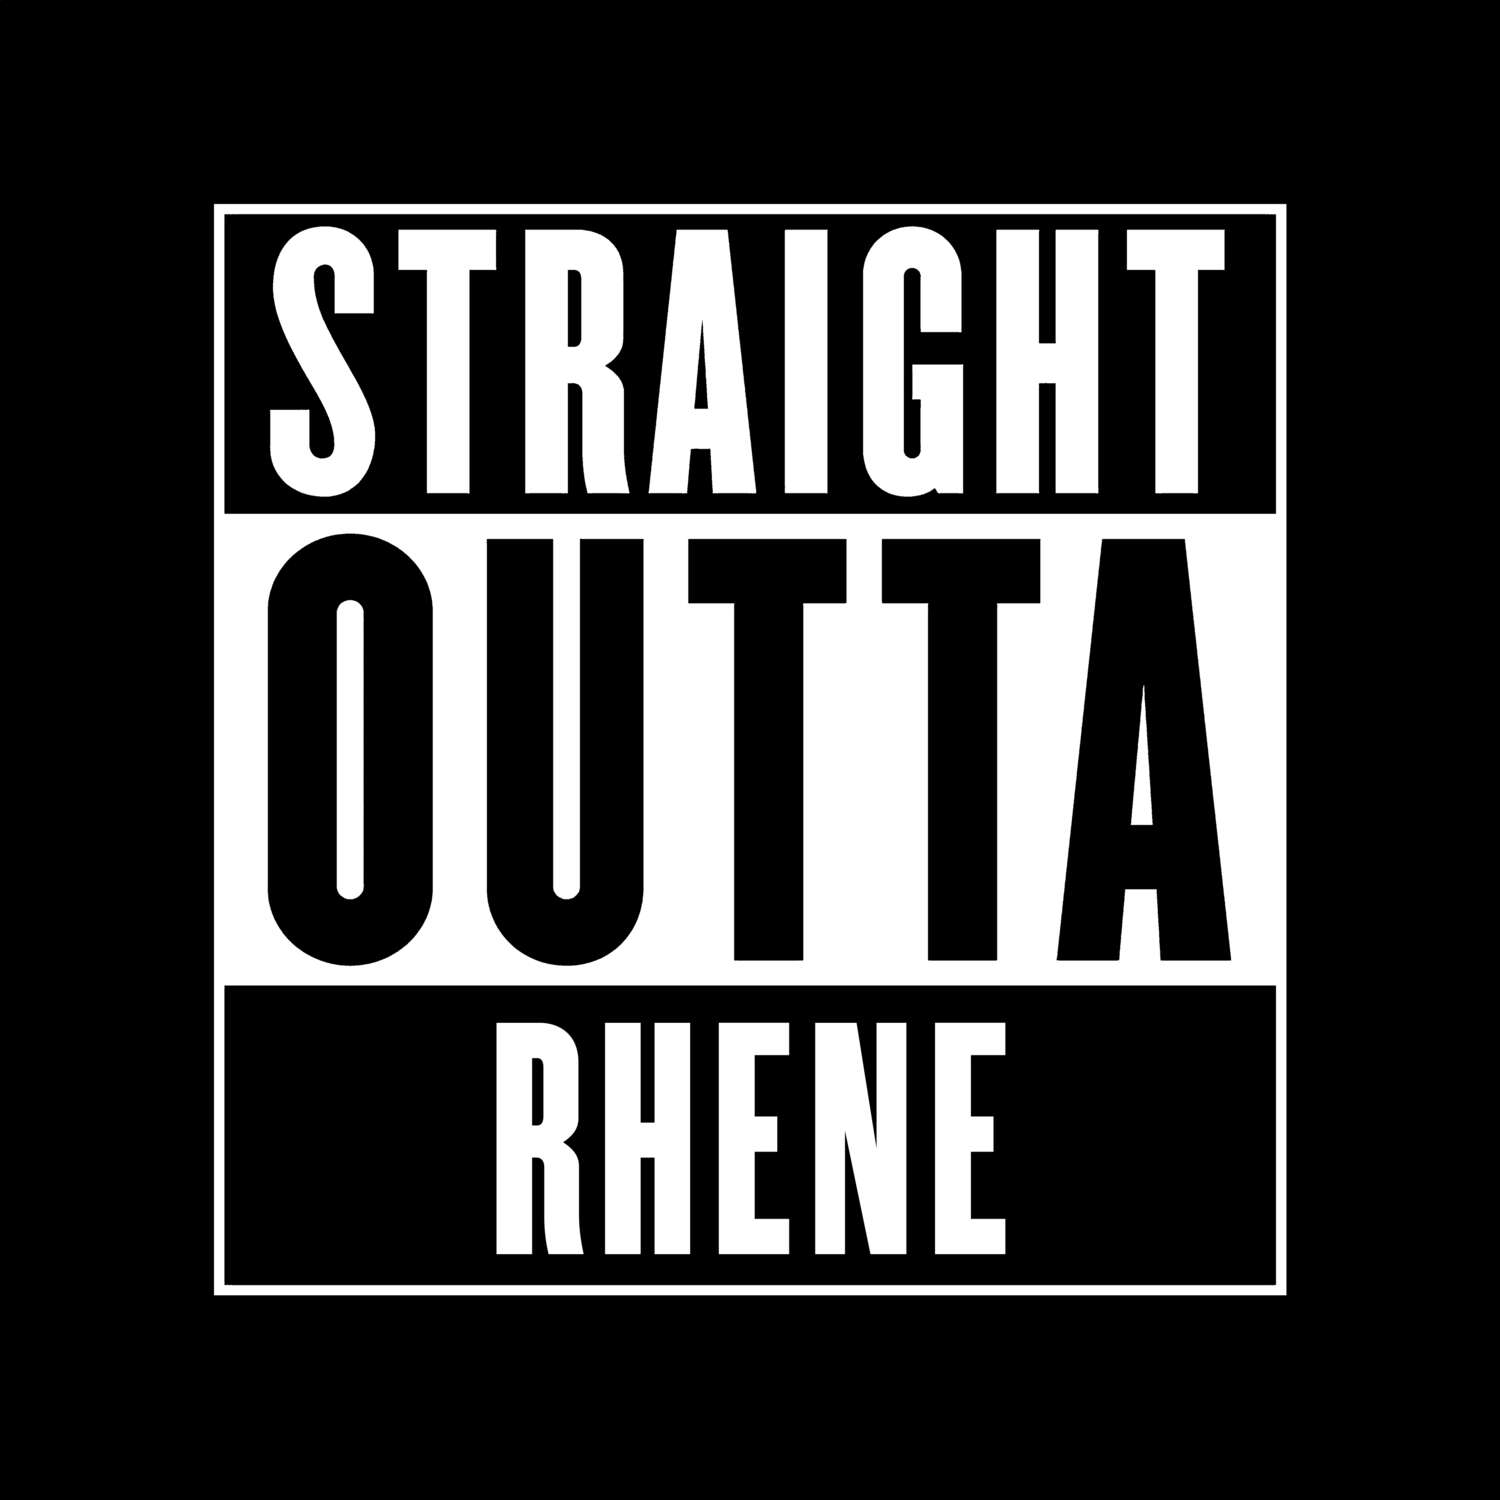 Rhene T-Shirt »Straight Outta«